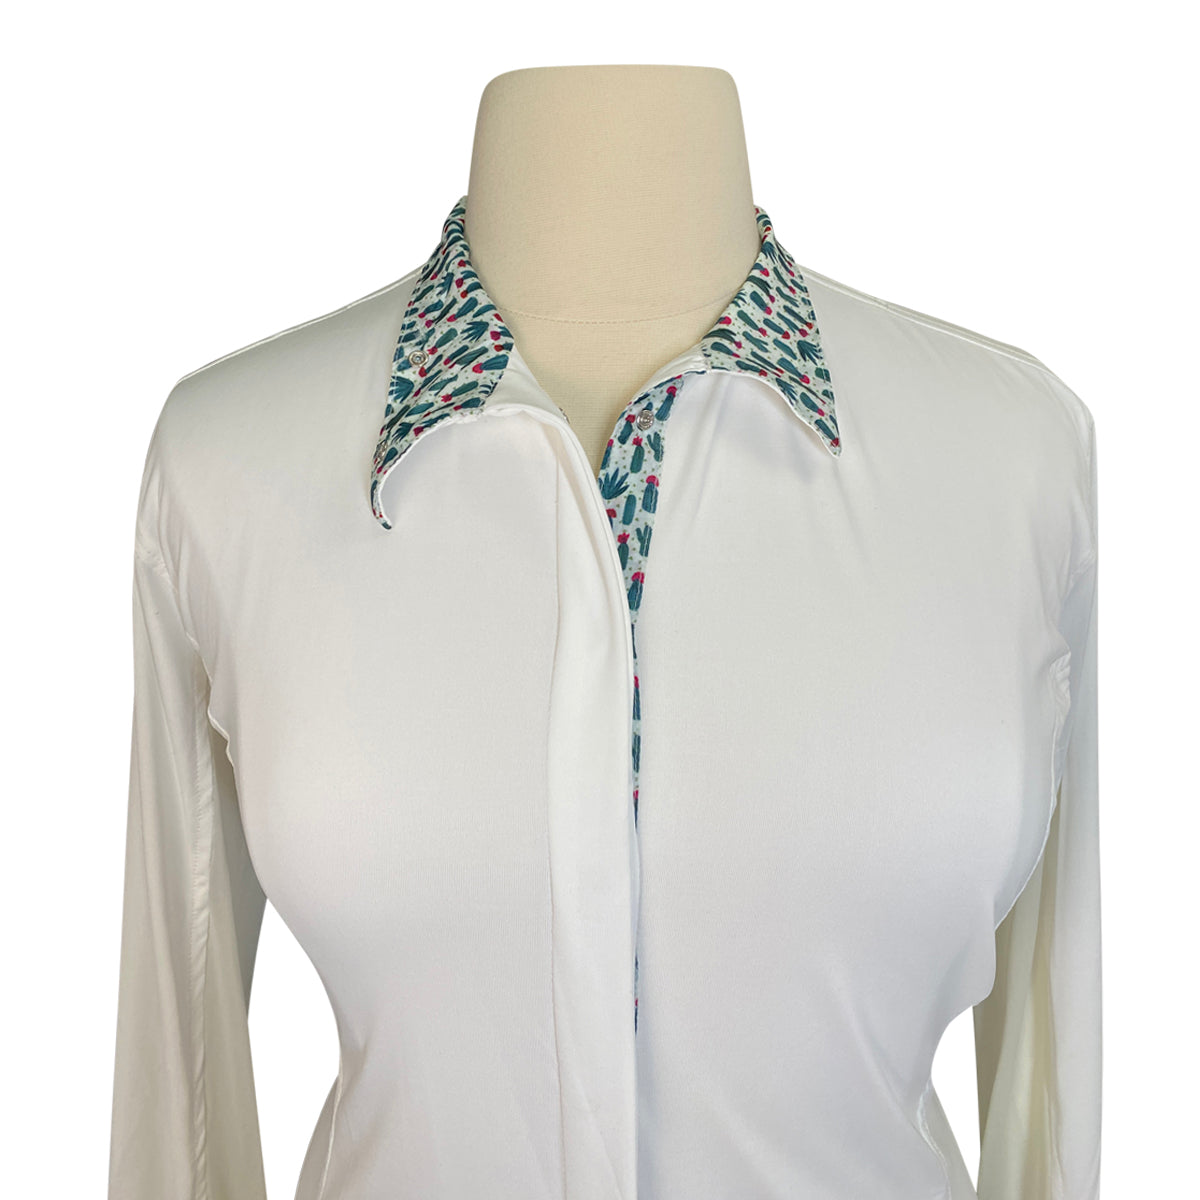 Smartpak Piper Long Sleeve Show Shirt in White/Cacti 